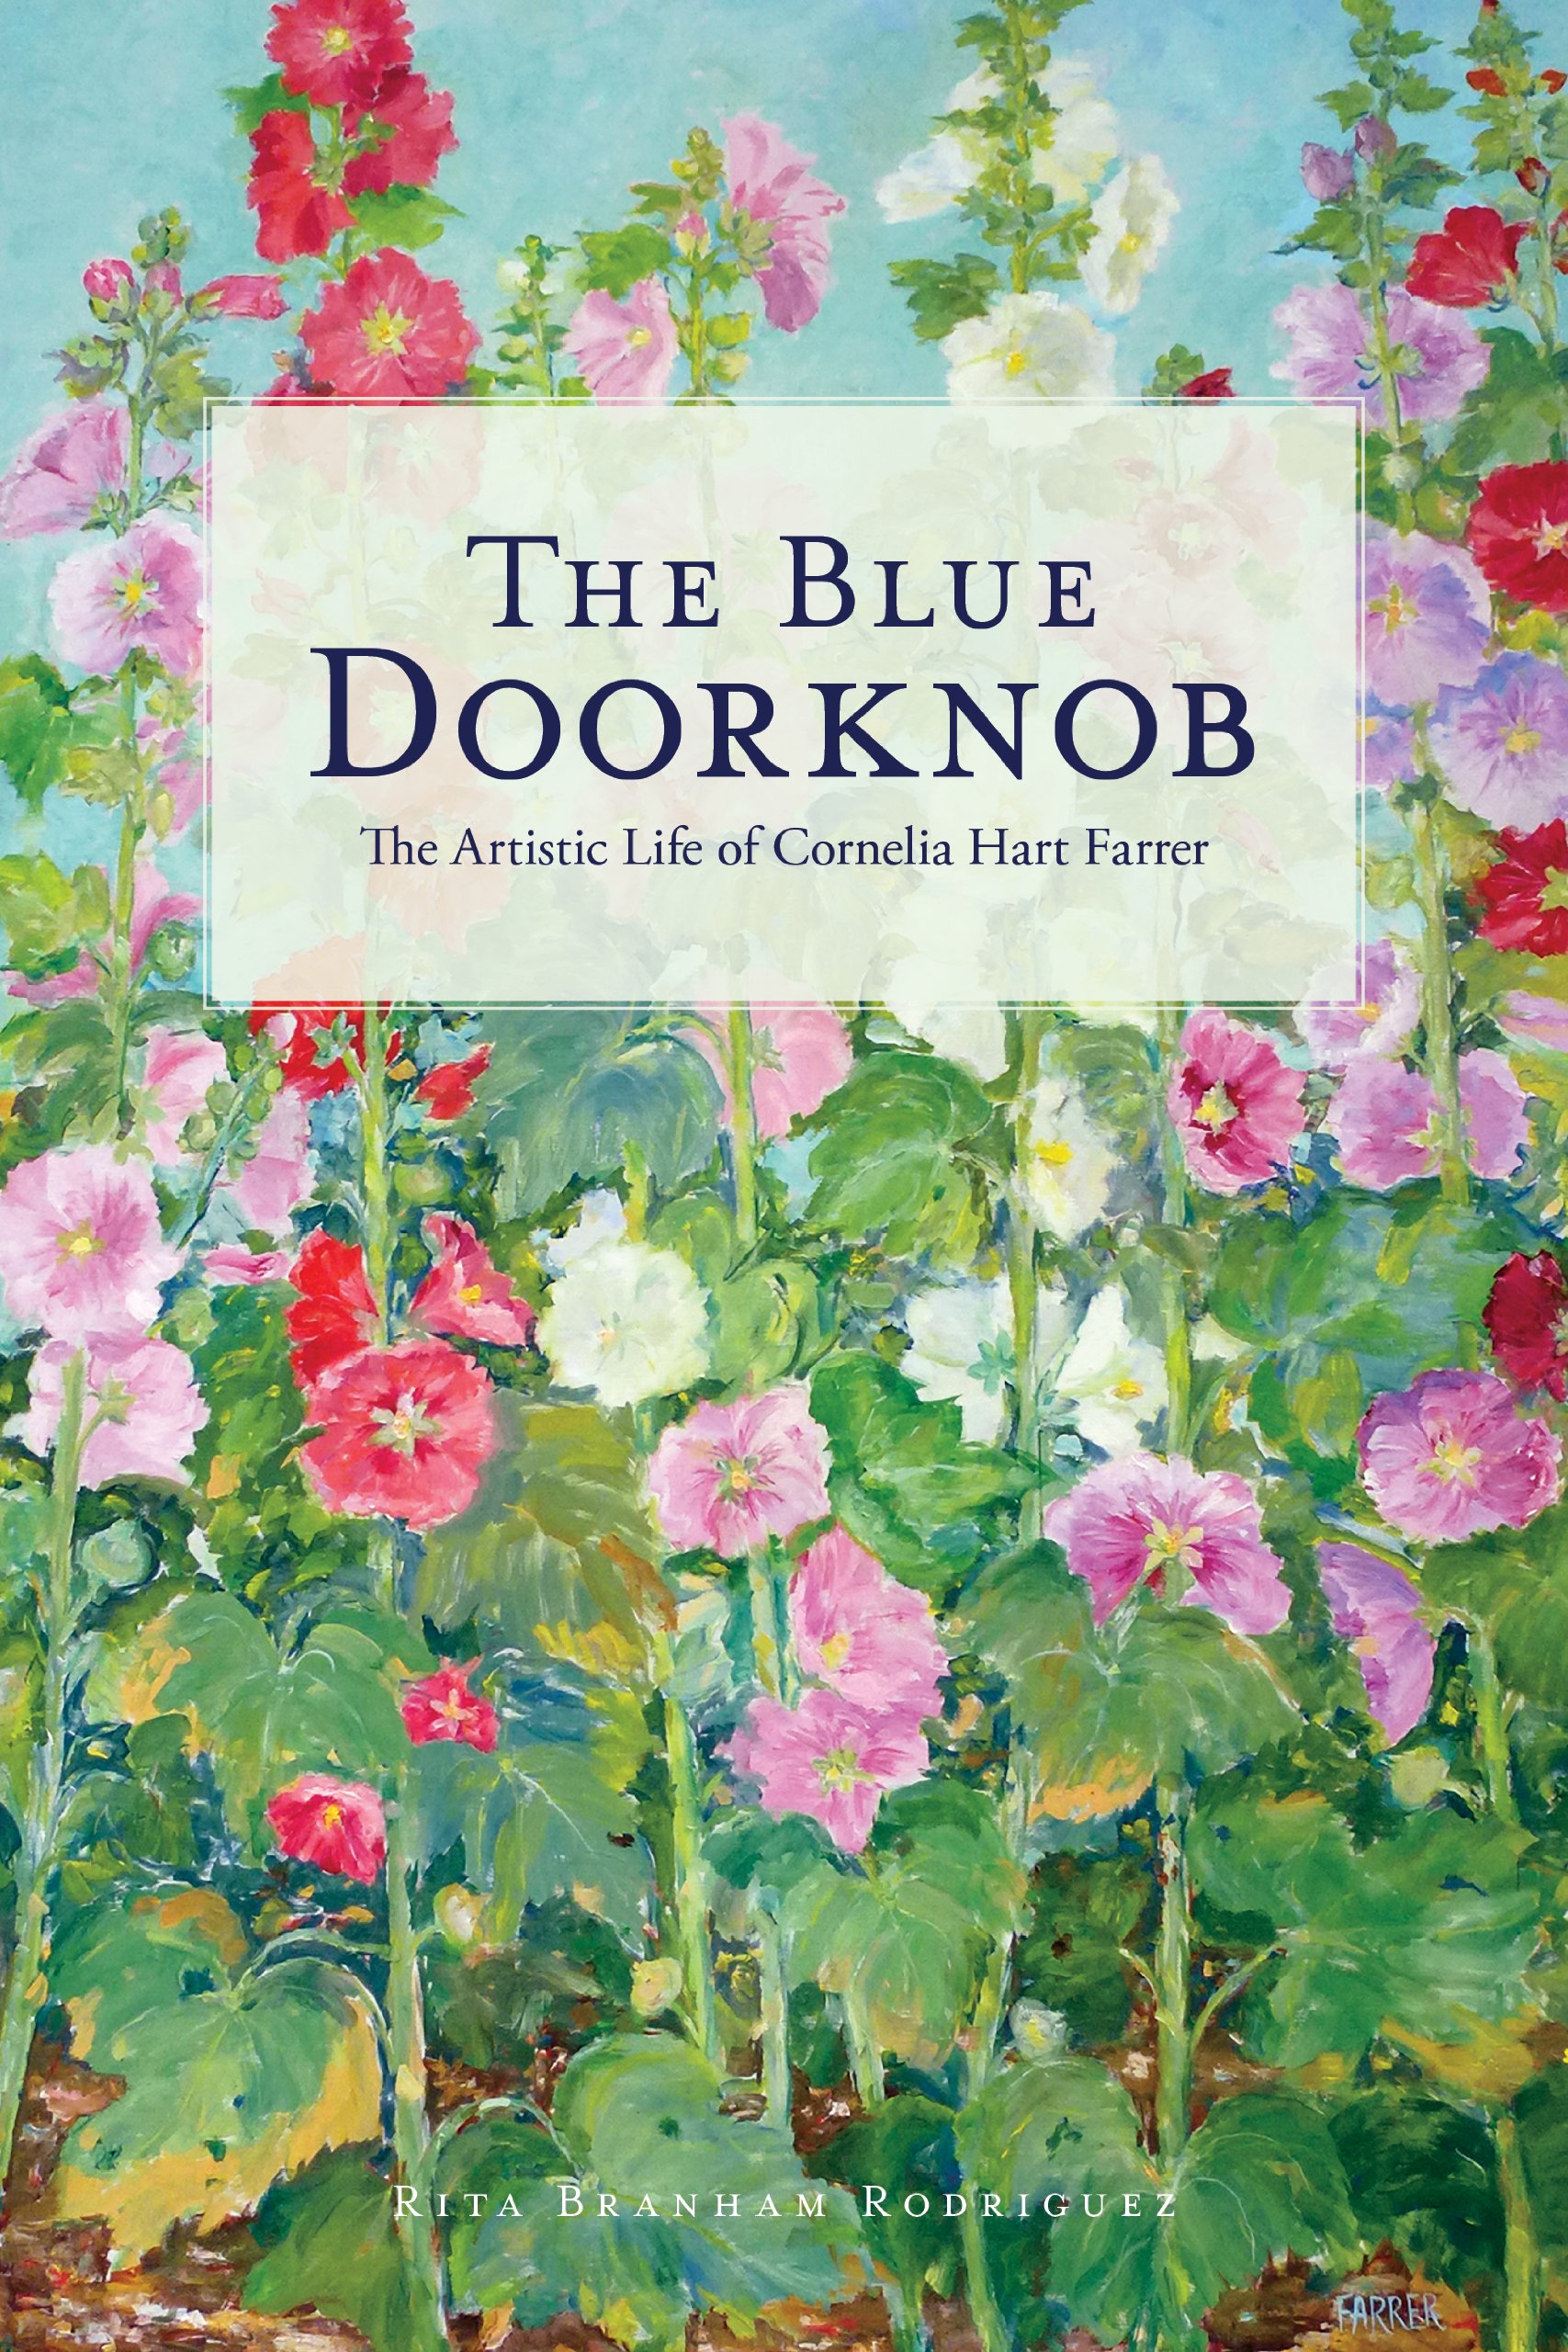 The blue doorknob: The artistic life of Cornelia Hart Farrer (book cover)